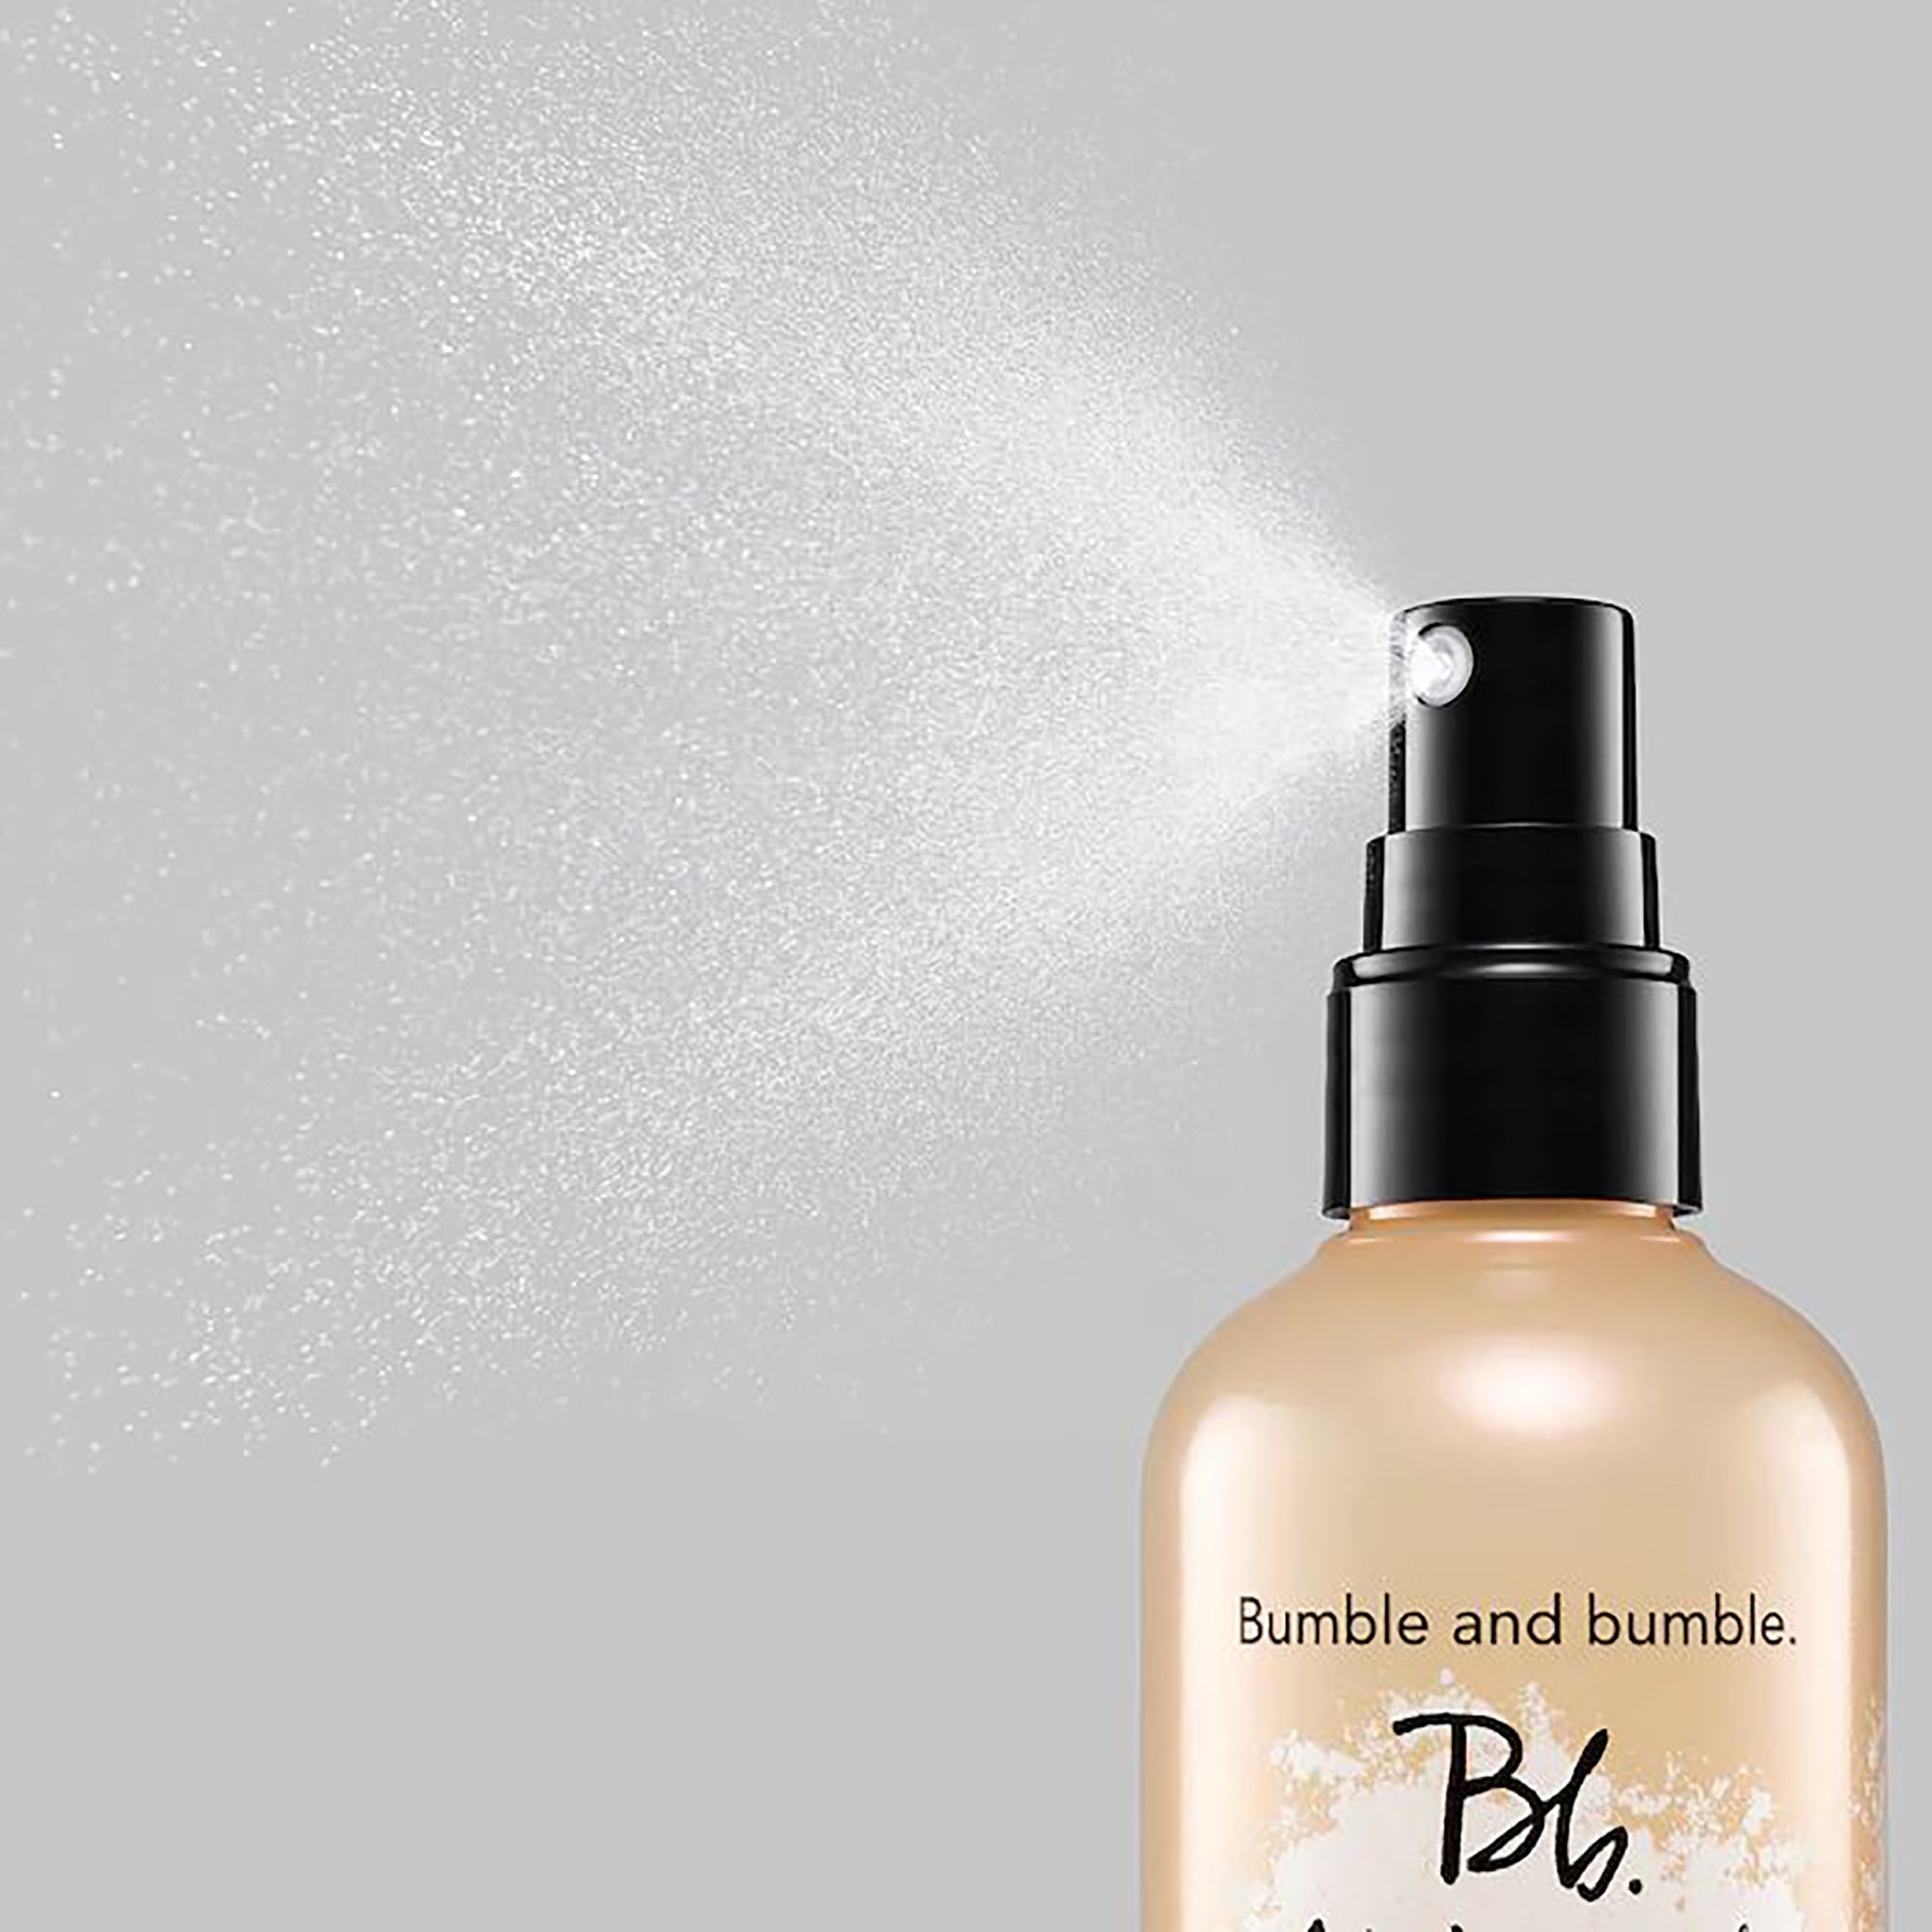 Bumble and bumble Pret-a-Powder Post Workout Dry Shampoo Mist / 4OZ